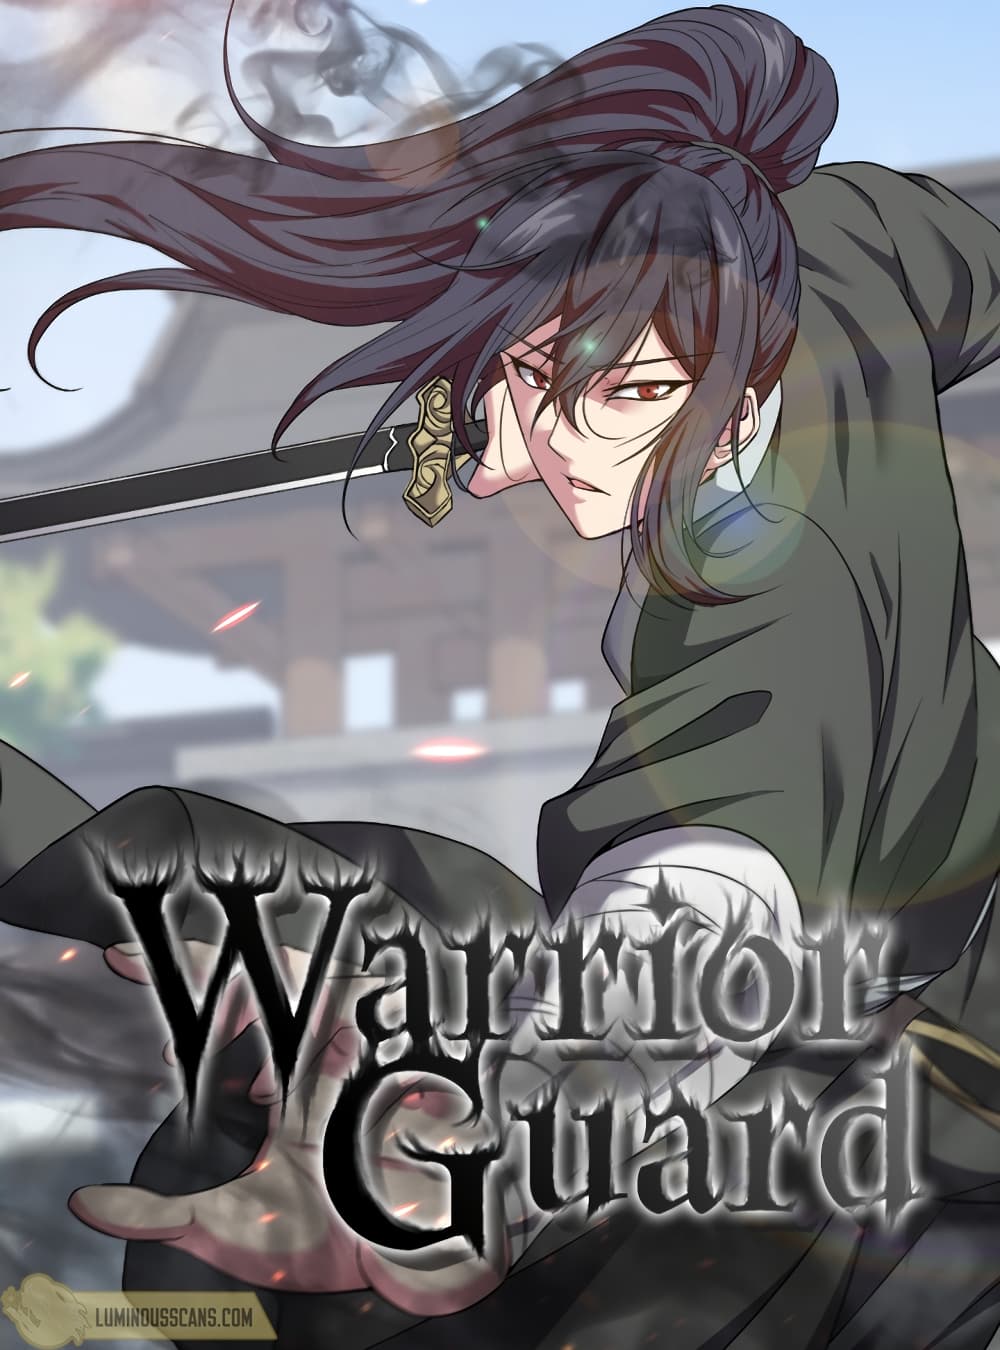 Warrior Guard 20-20